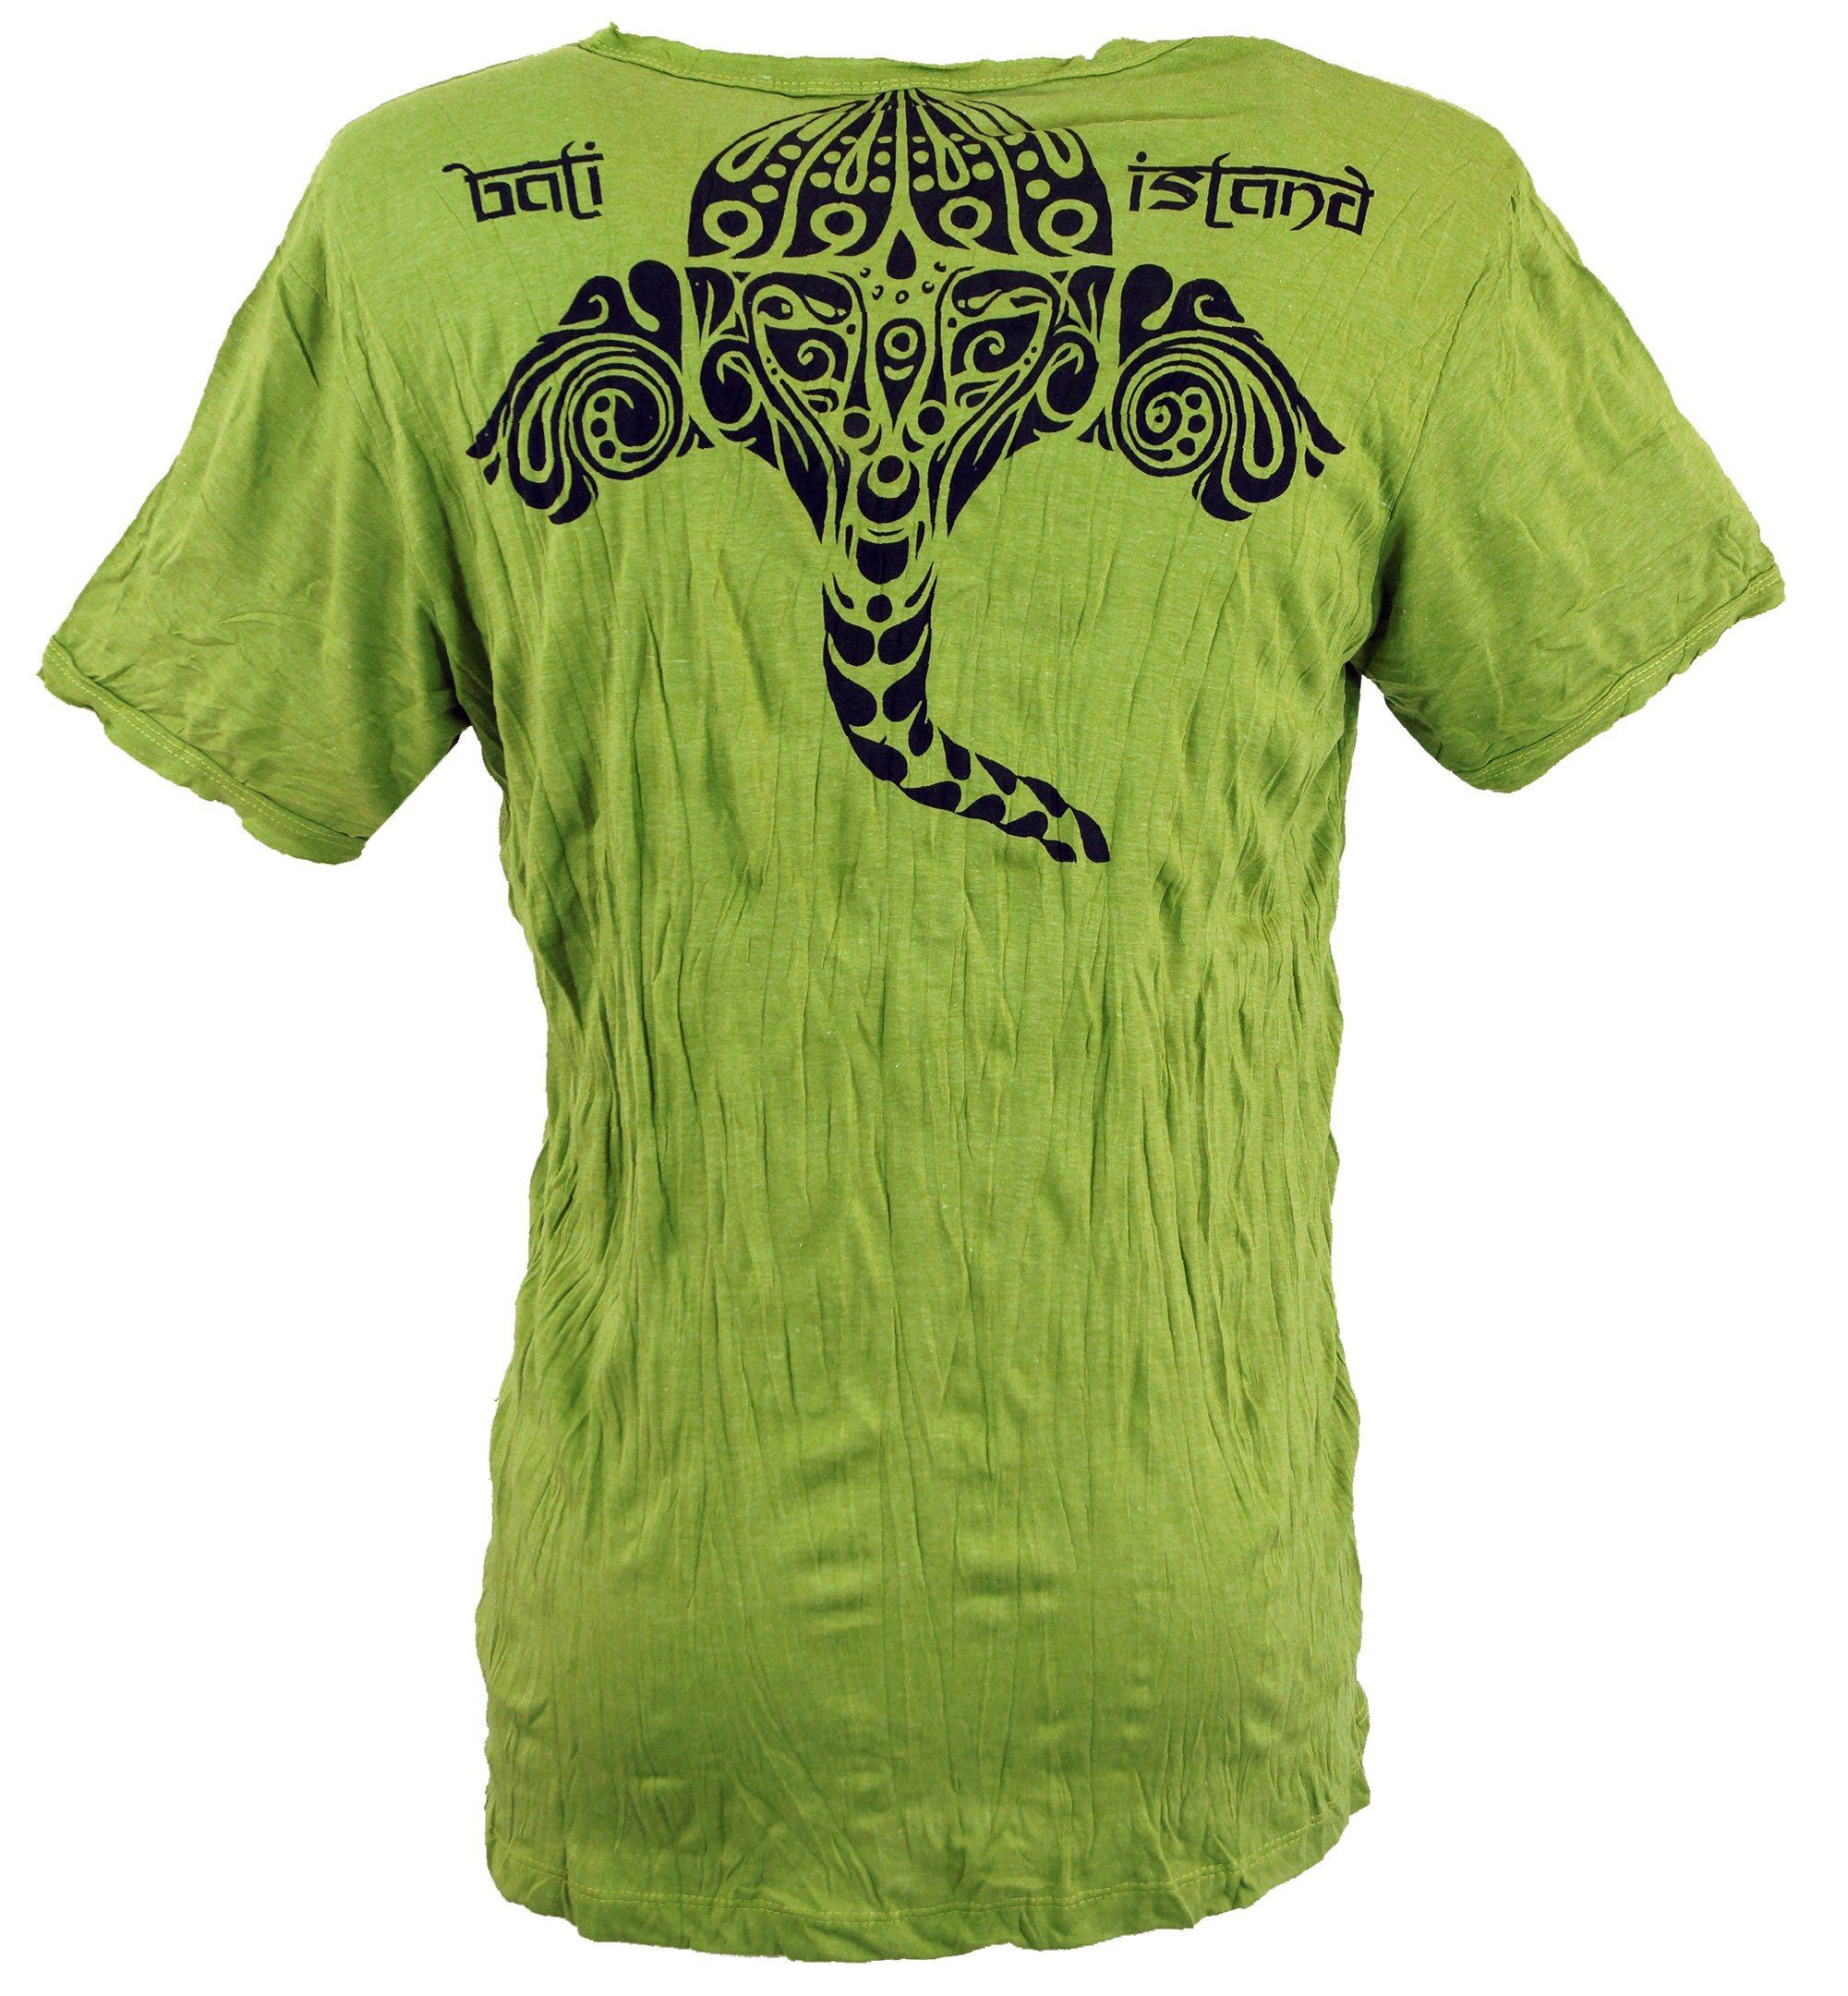 Bekleidung Guru-Shop Style, - alternative Ganesha Goa T-Shirt Festival, lemon Tribal Sure T-Shirt